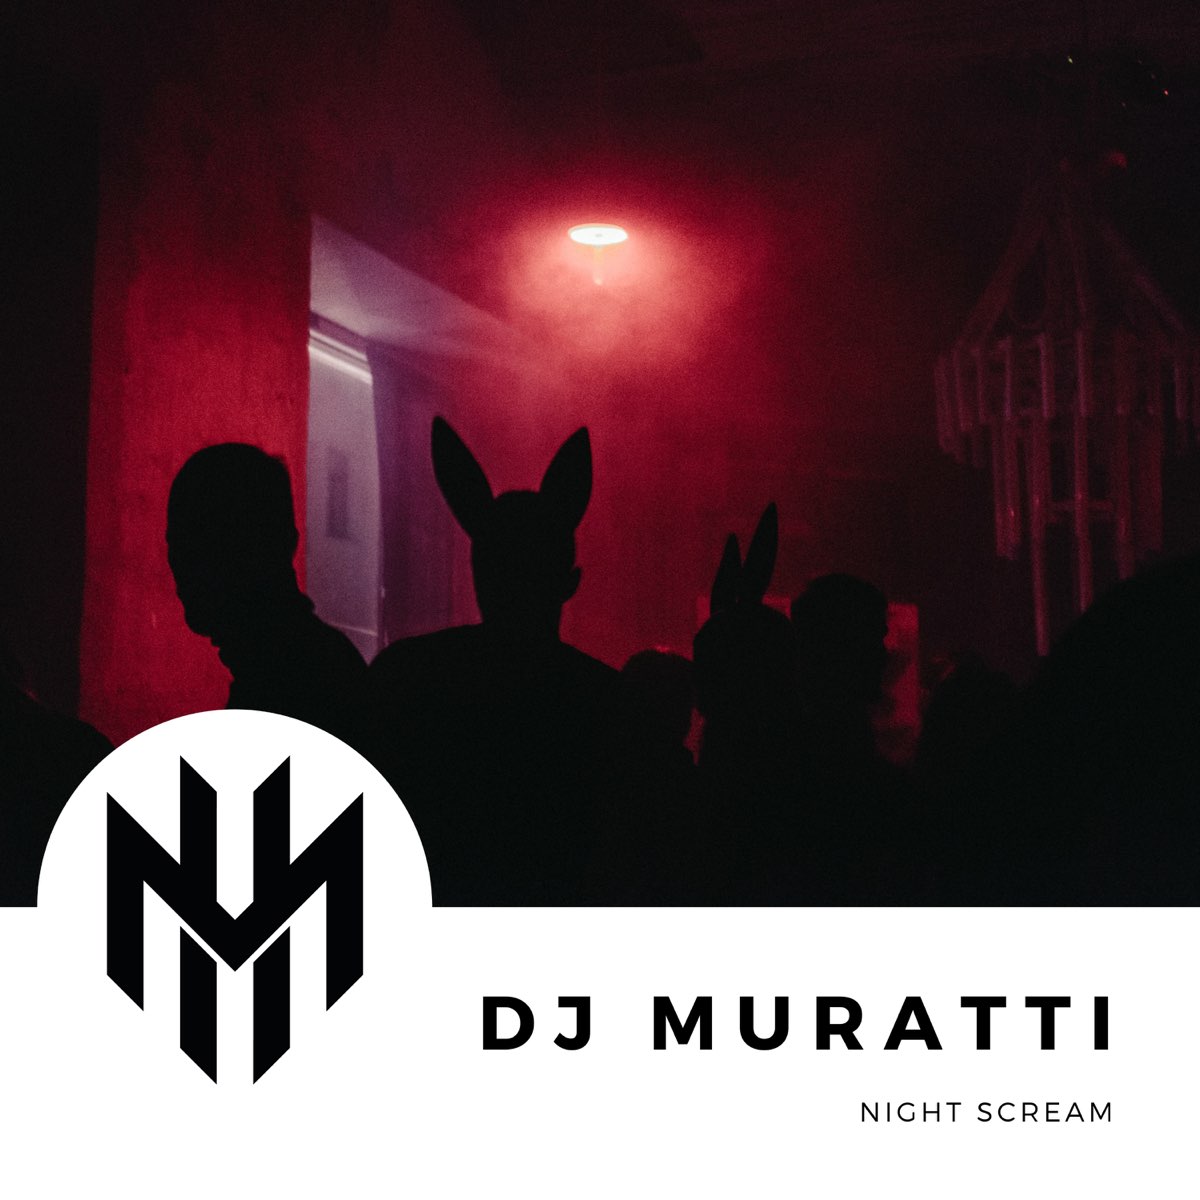 Dj muratti triangle violin. DJ Muratti 2022. Muratti Night Scream. DJ Muratti логотип. DJ Muratti Atom. Mp3.